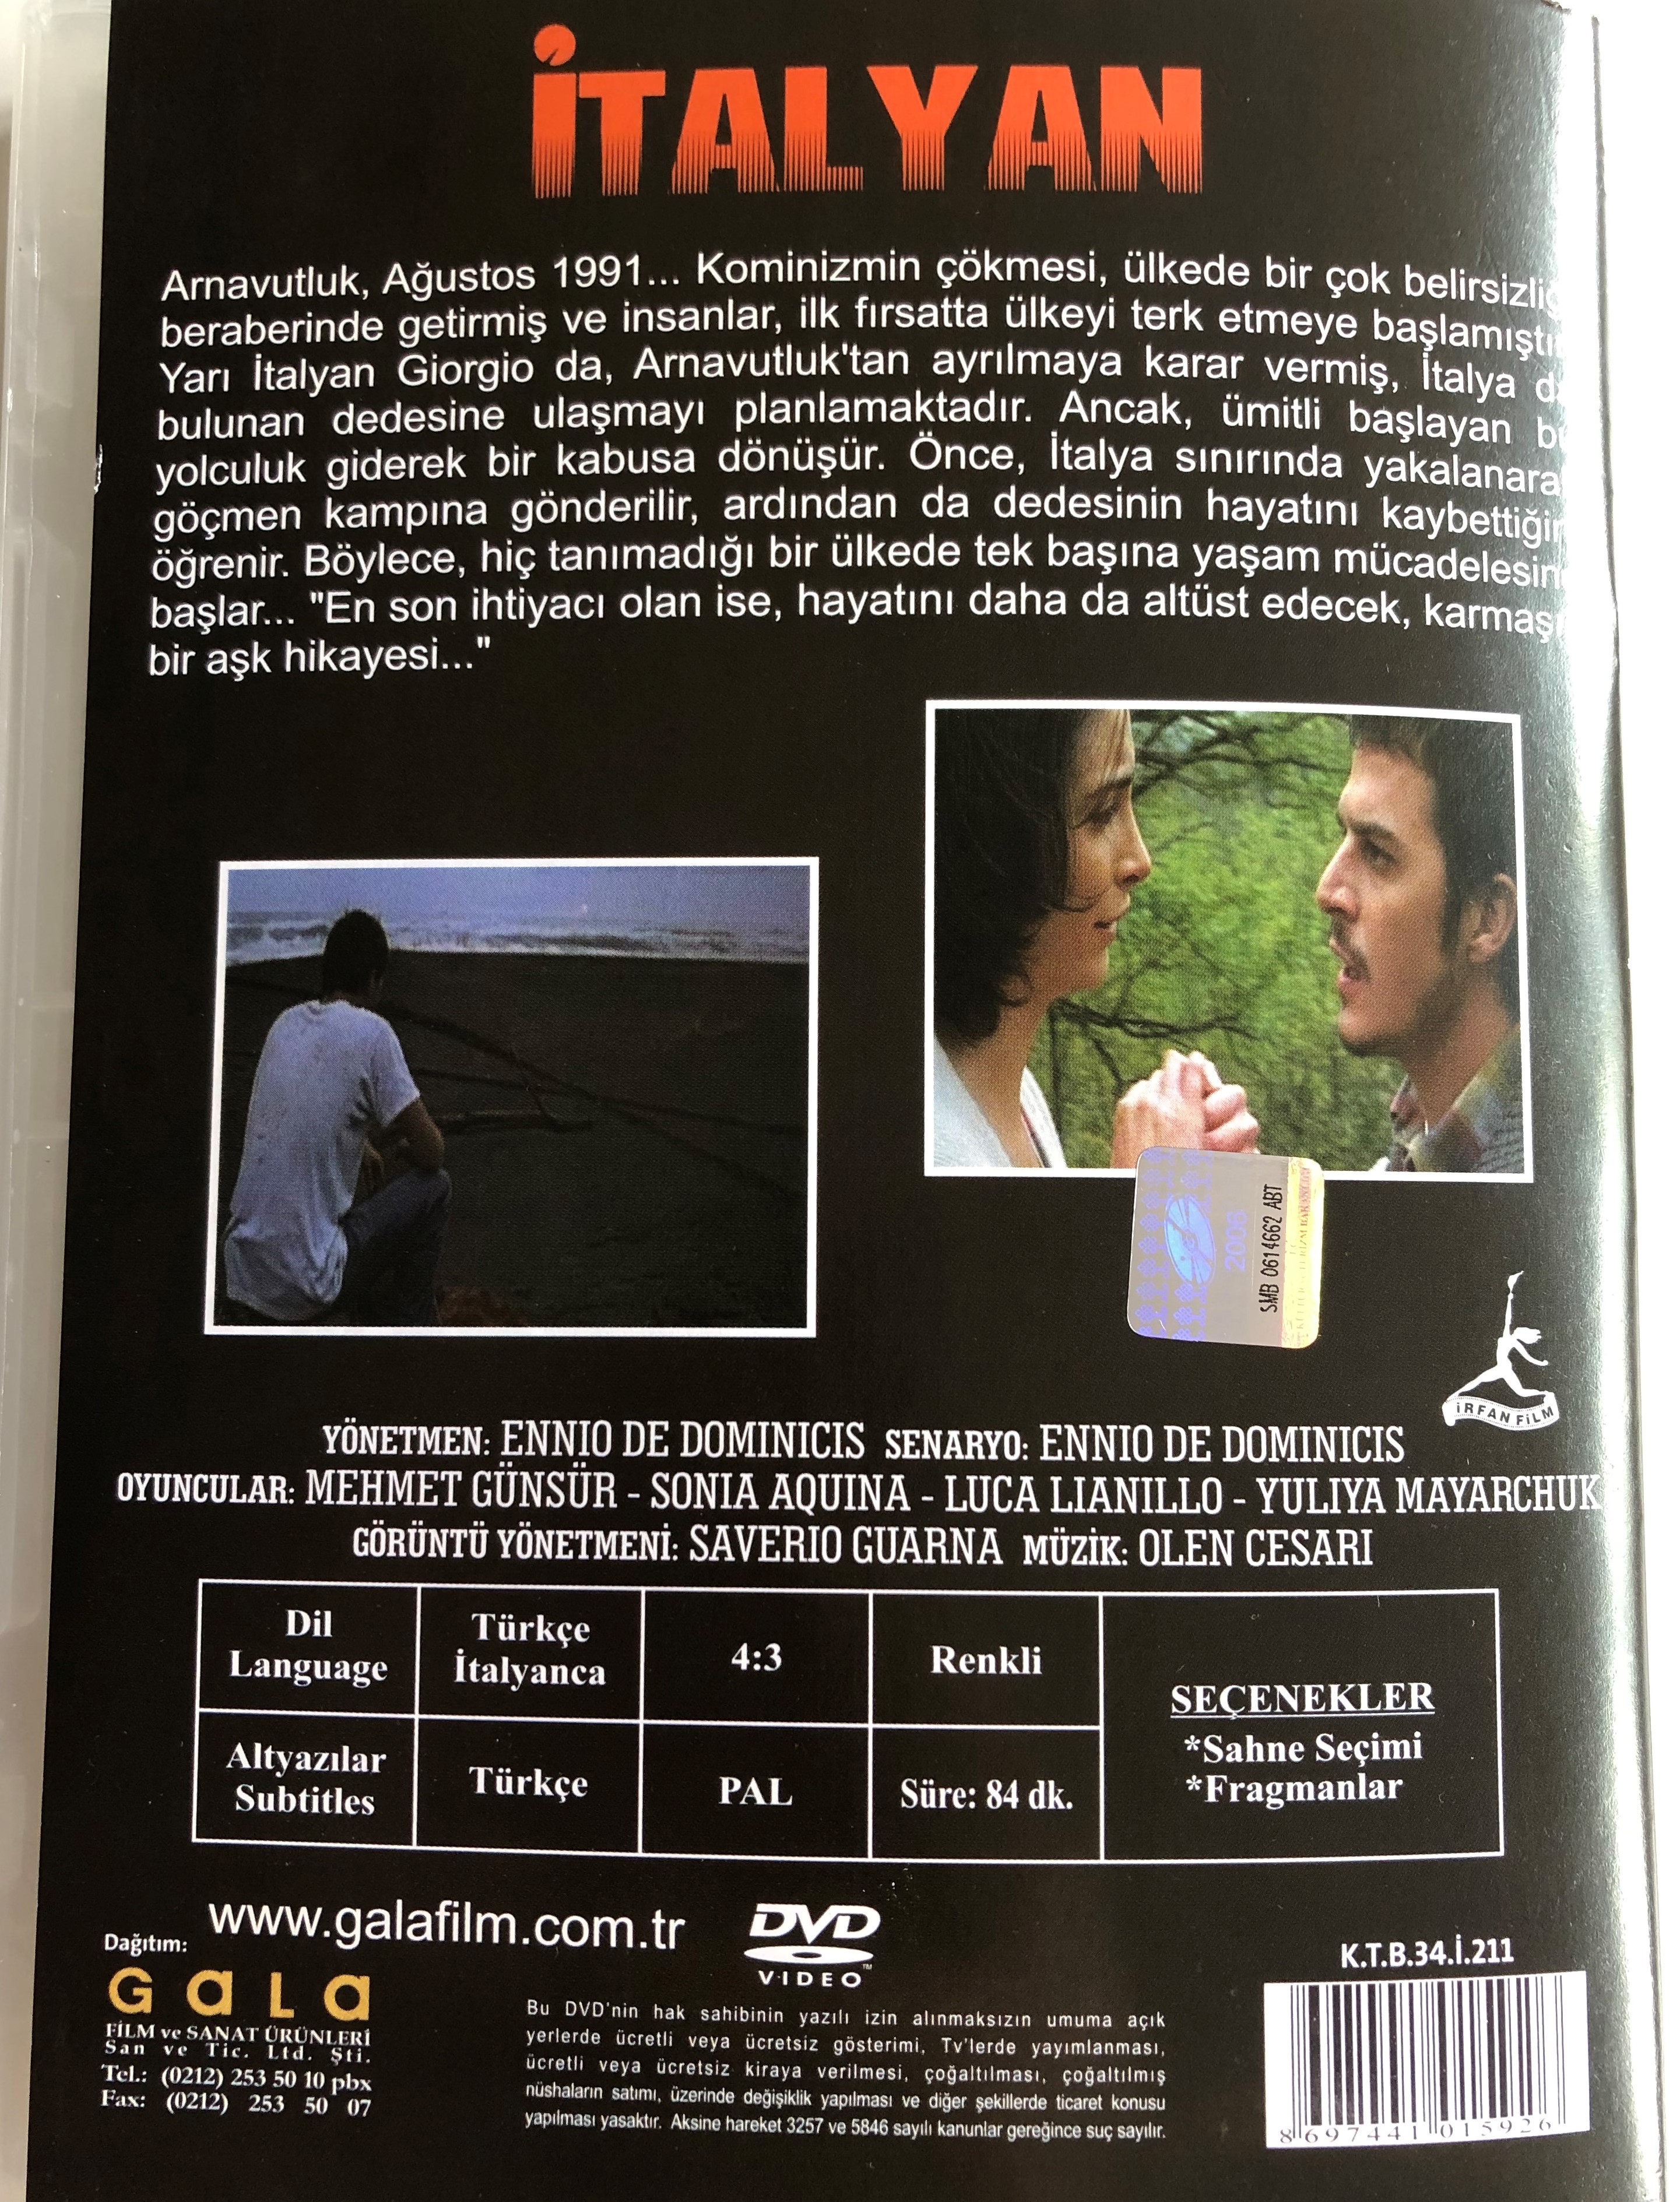 l-italiano-dvd-italyan-the-italian-directed-by-ennio-de-dominicis-2-.jpg